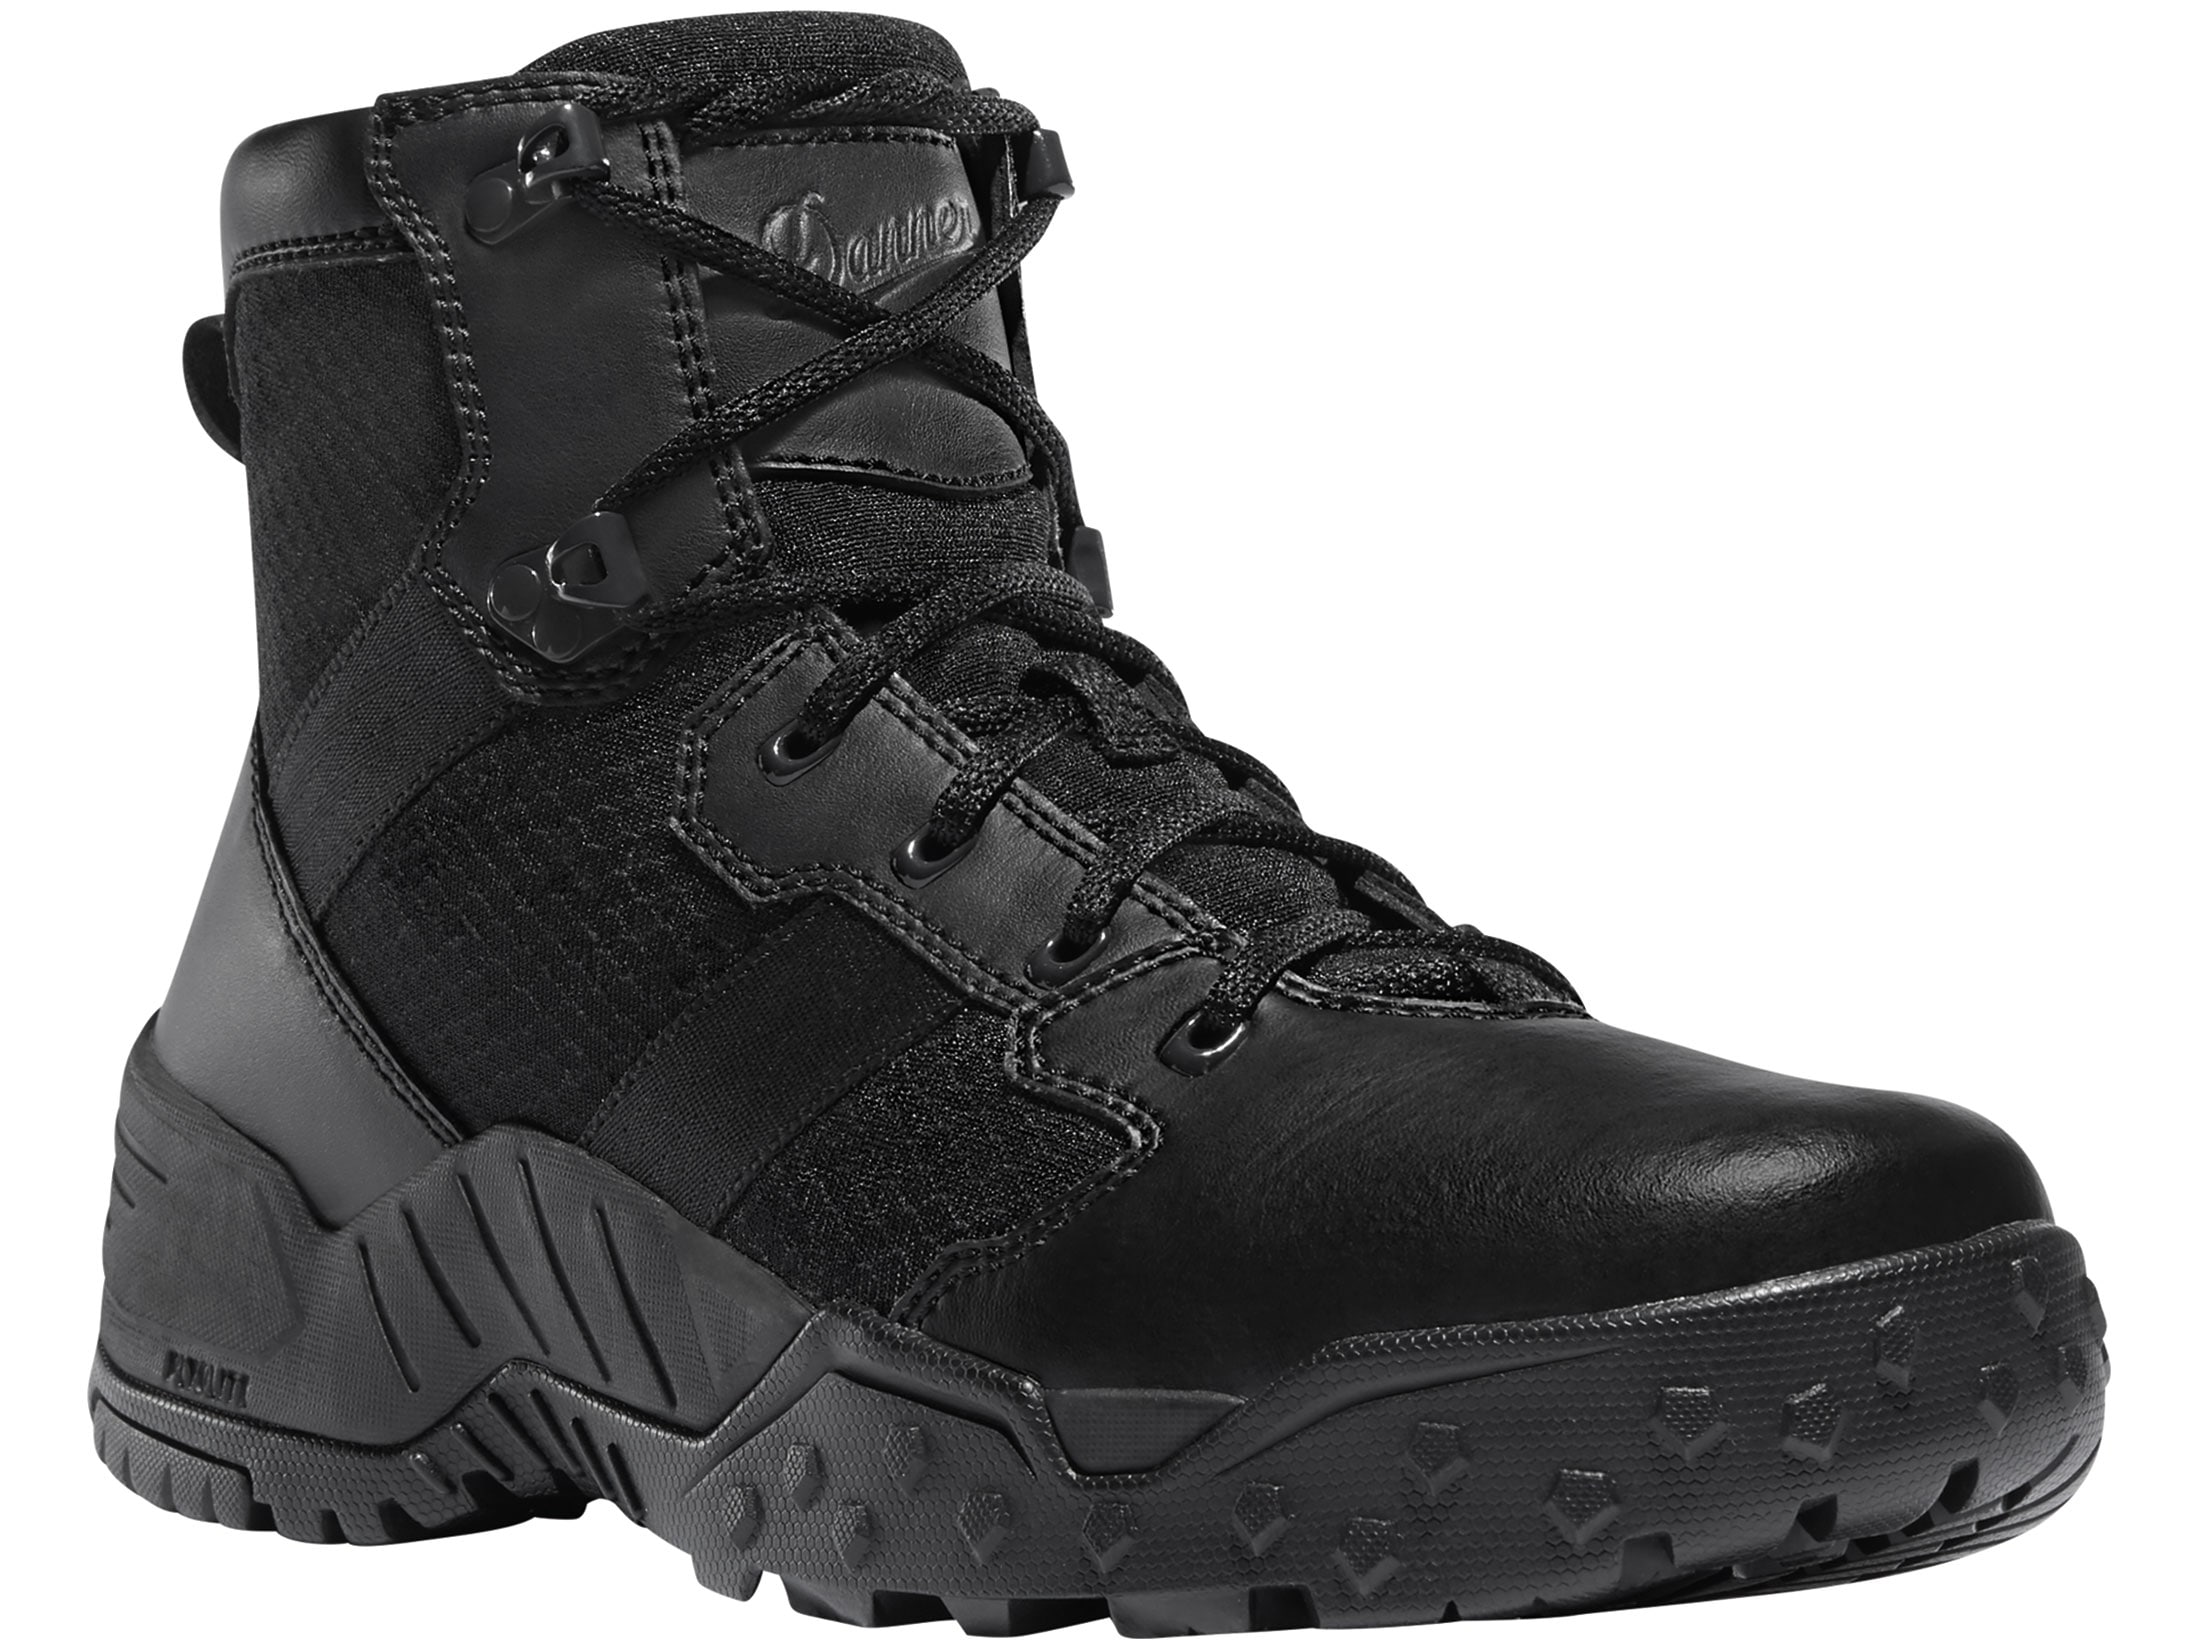 Danner Scorch 6 Side-Zip Tactical Boots Leather/Nylon Black Men's 10.5